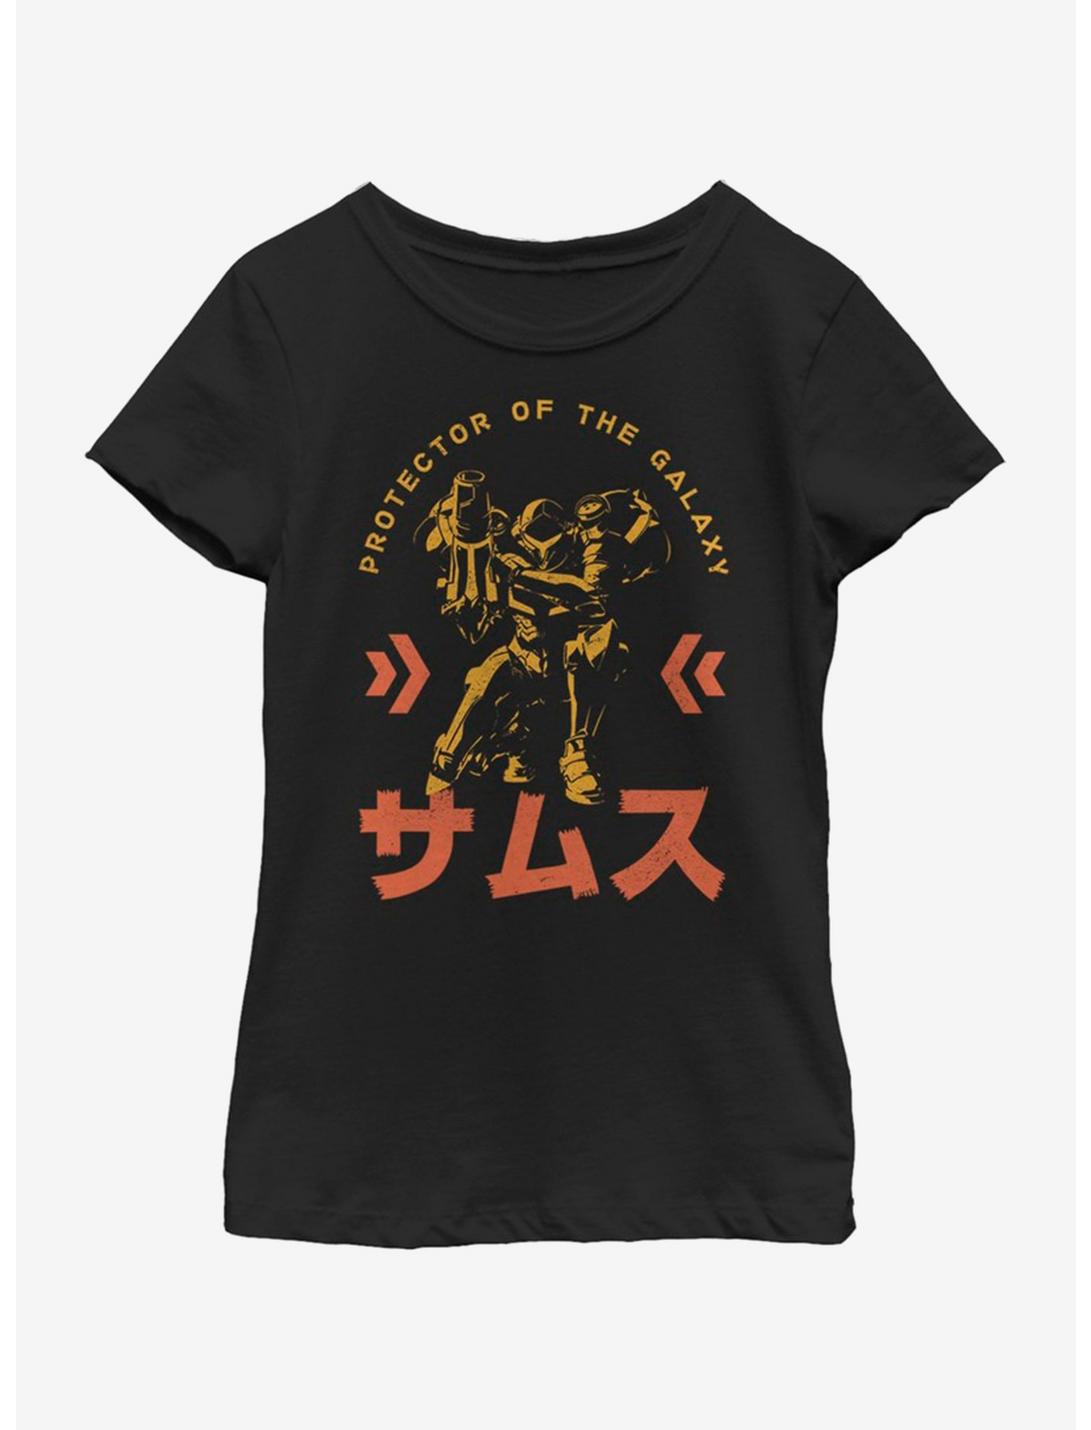 Nintendo Protector Of The Galaxy Youth Girls T-Shirt, BLACK, hi-res